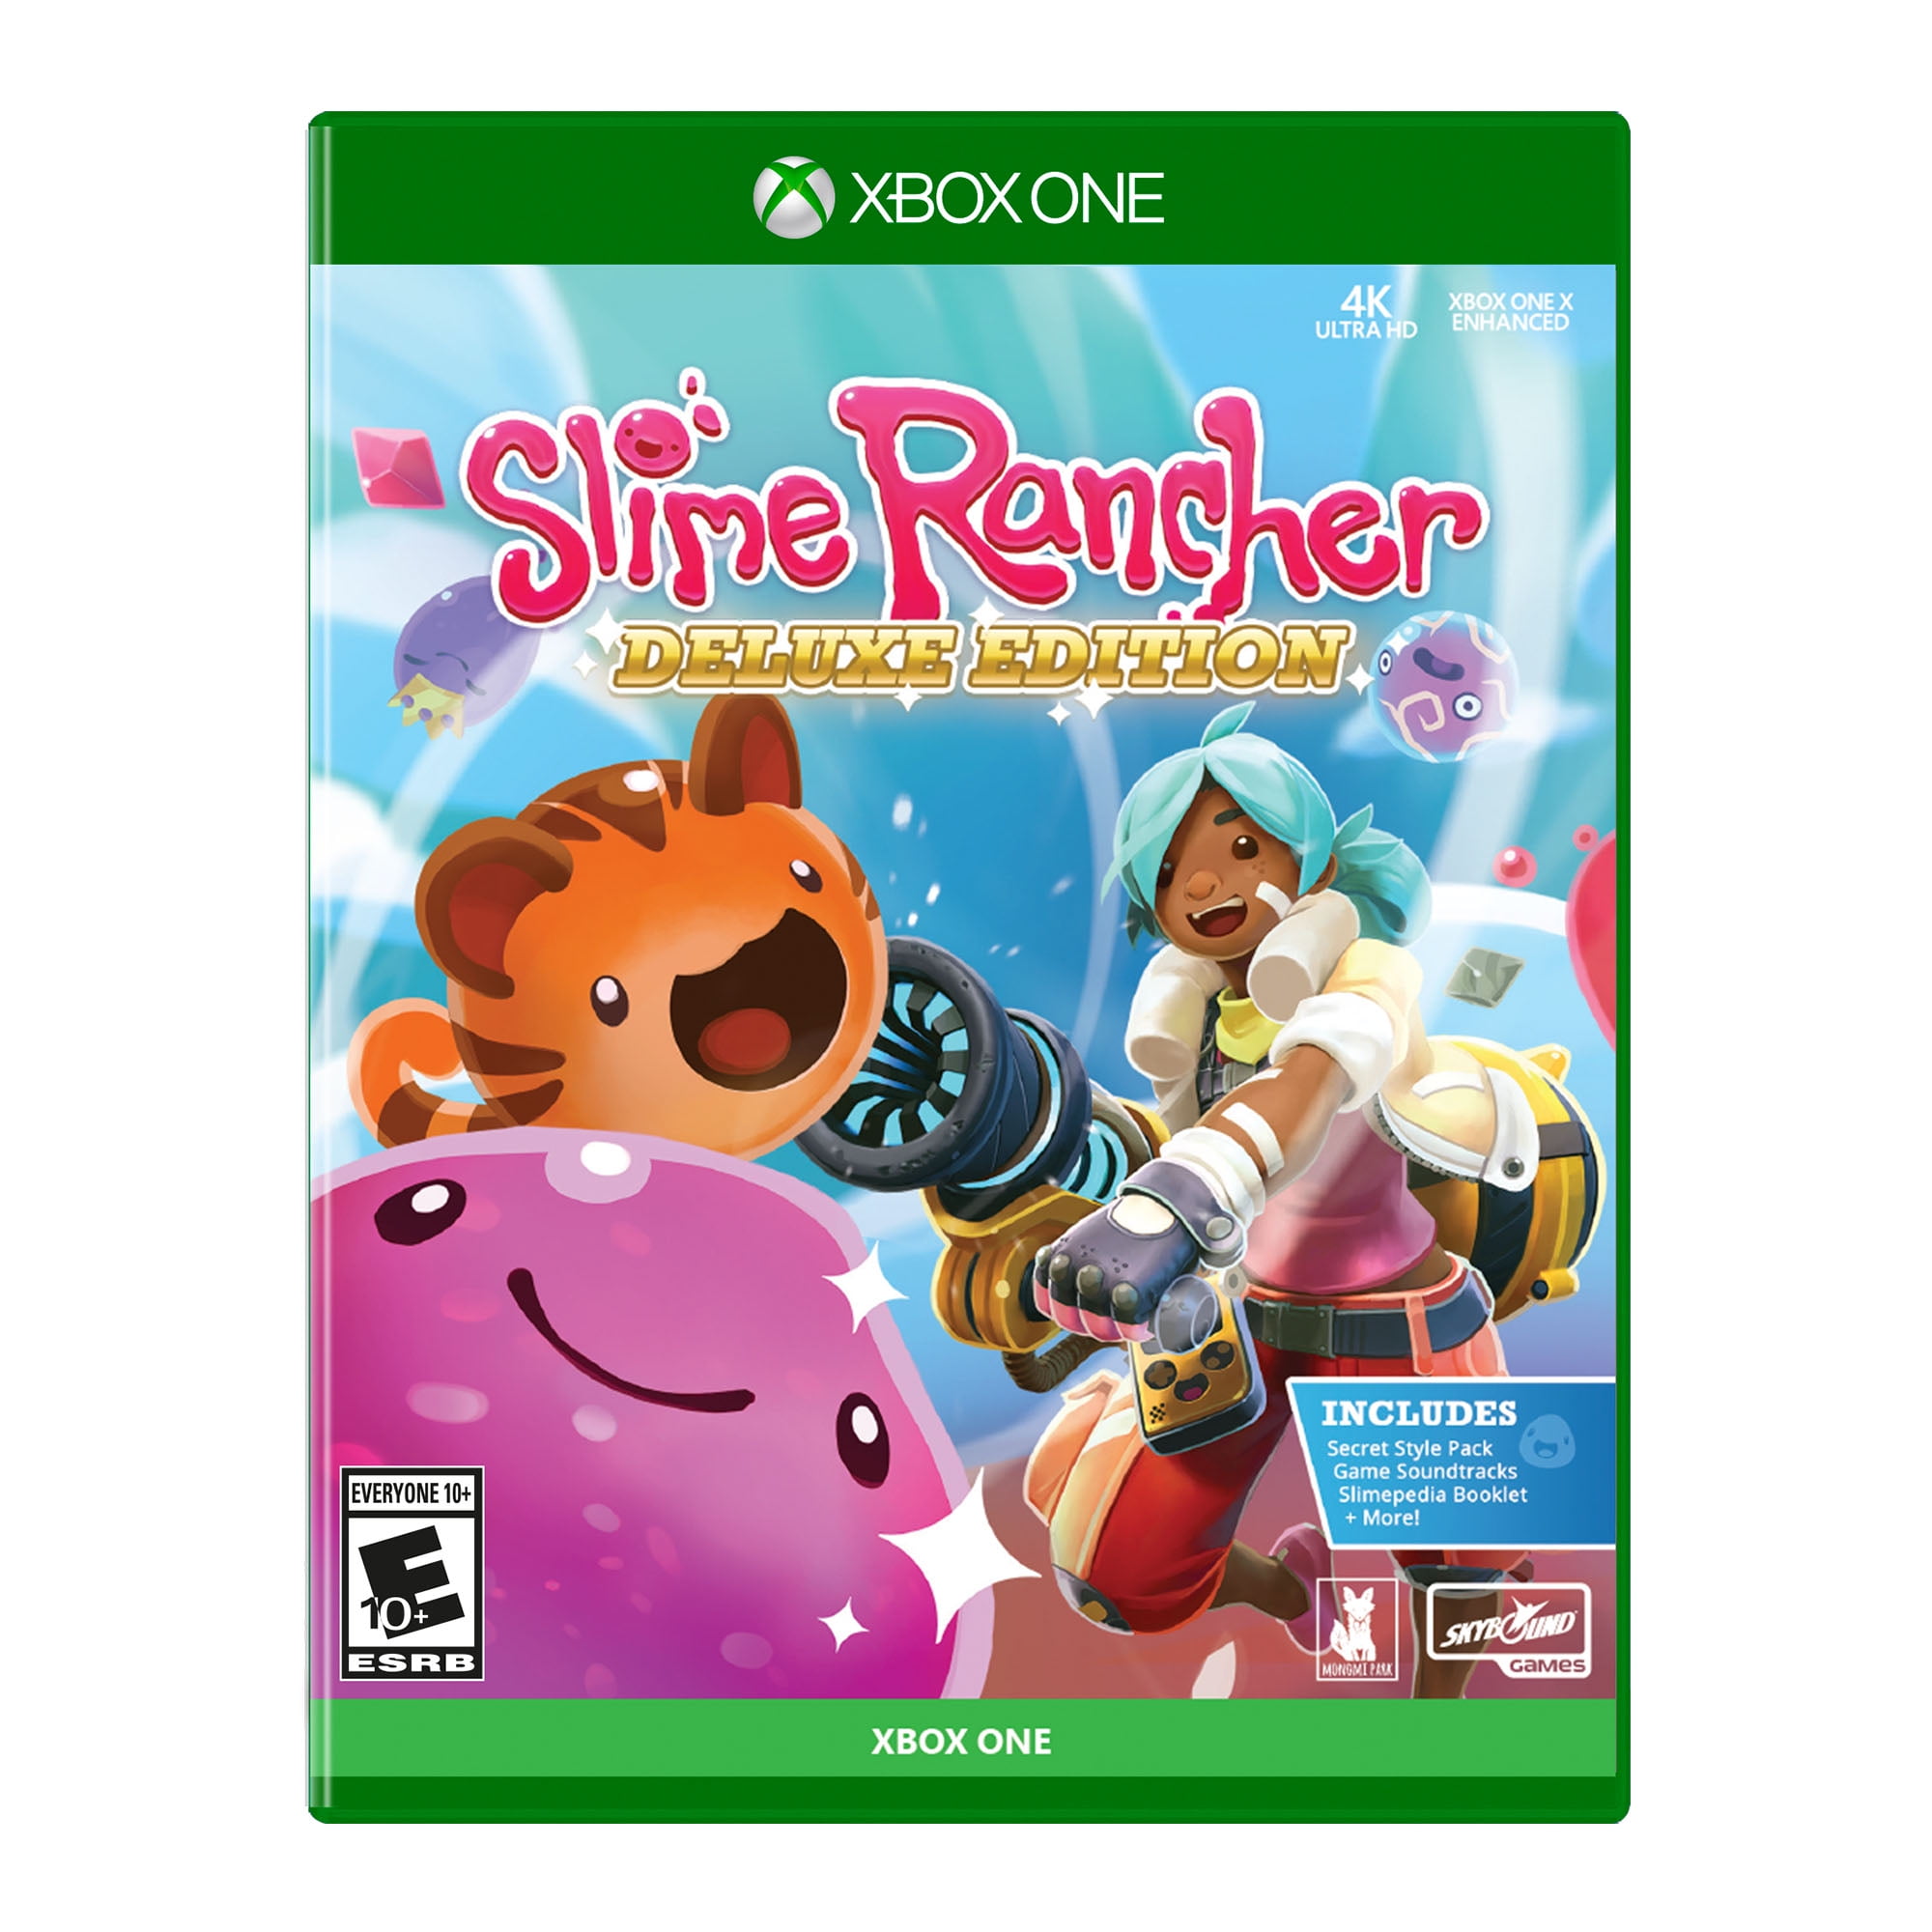 Slime Rancher Deluxe Edition, Skybound Games, Xbox One, 811949032300 - Walmart.com - Walmart.com